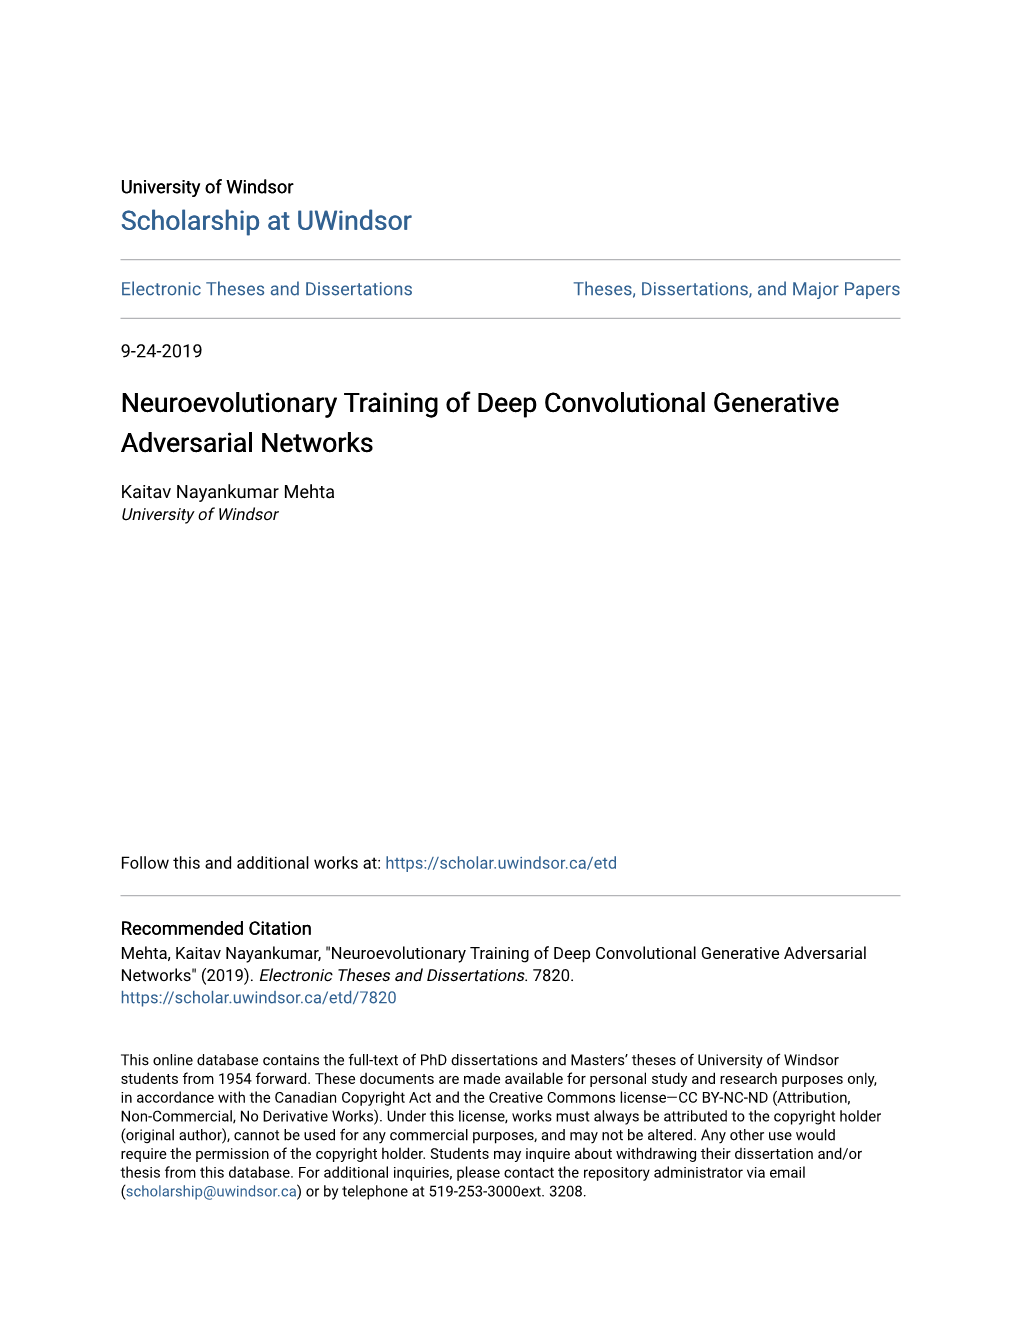 Neuroevolutionary Training of Deep Convolutional Generative Adversarial Networks